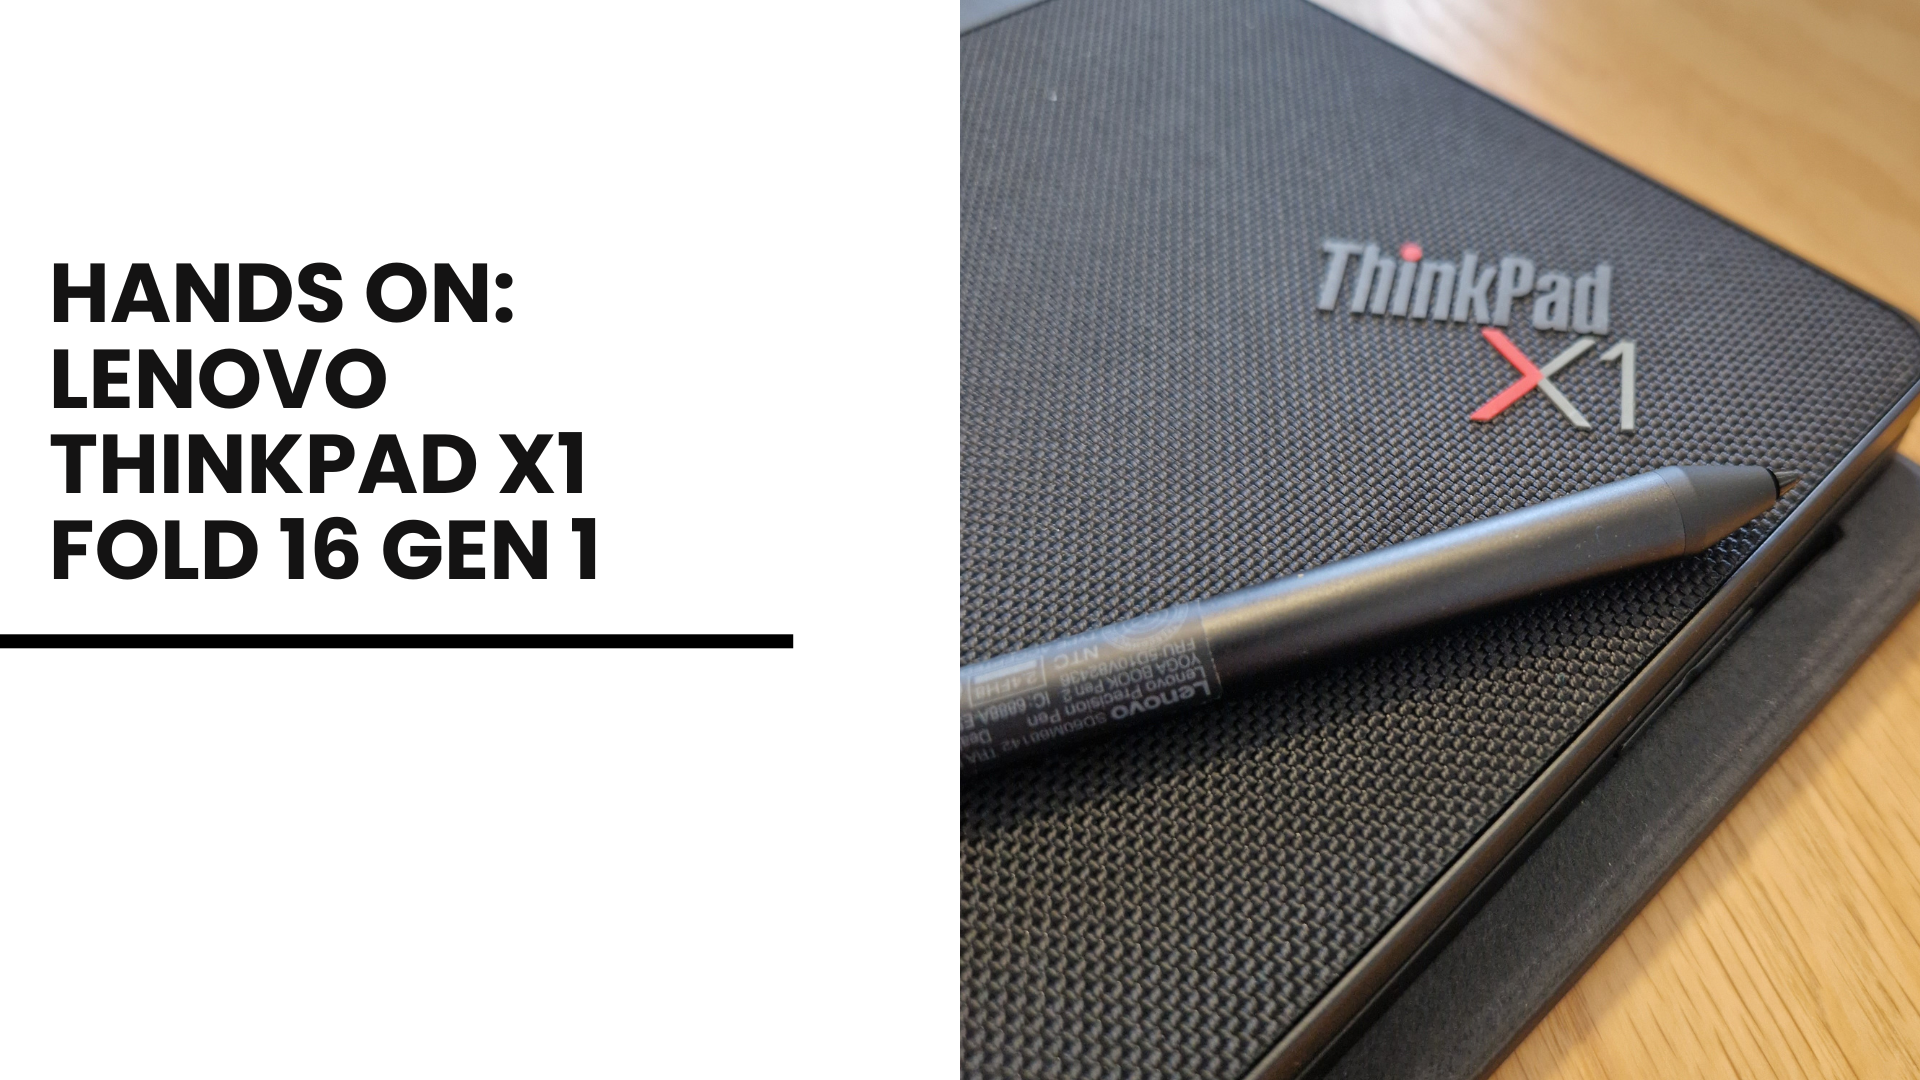 Hands on: Lenovo ThinkPad X1 Fold 16 Gen 1